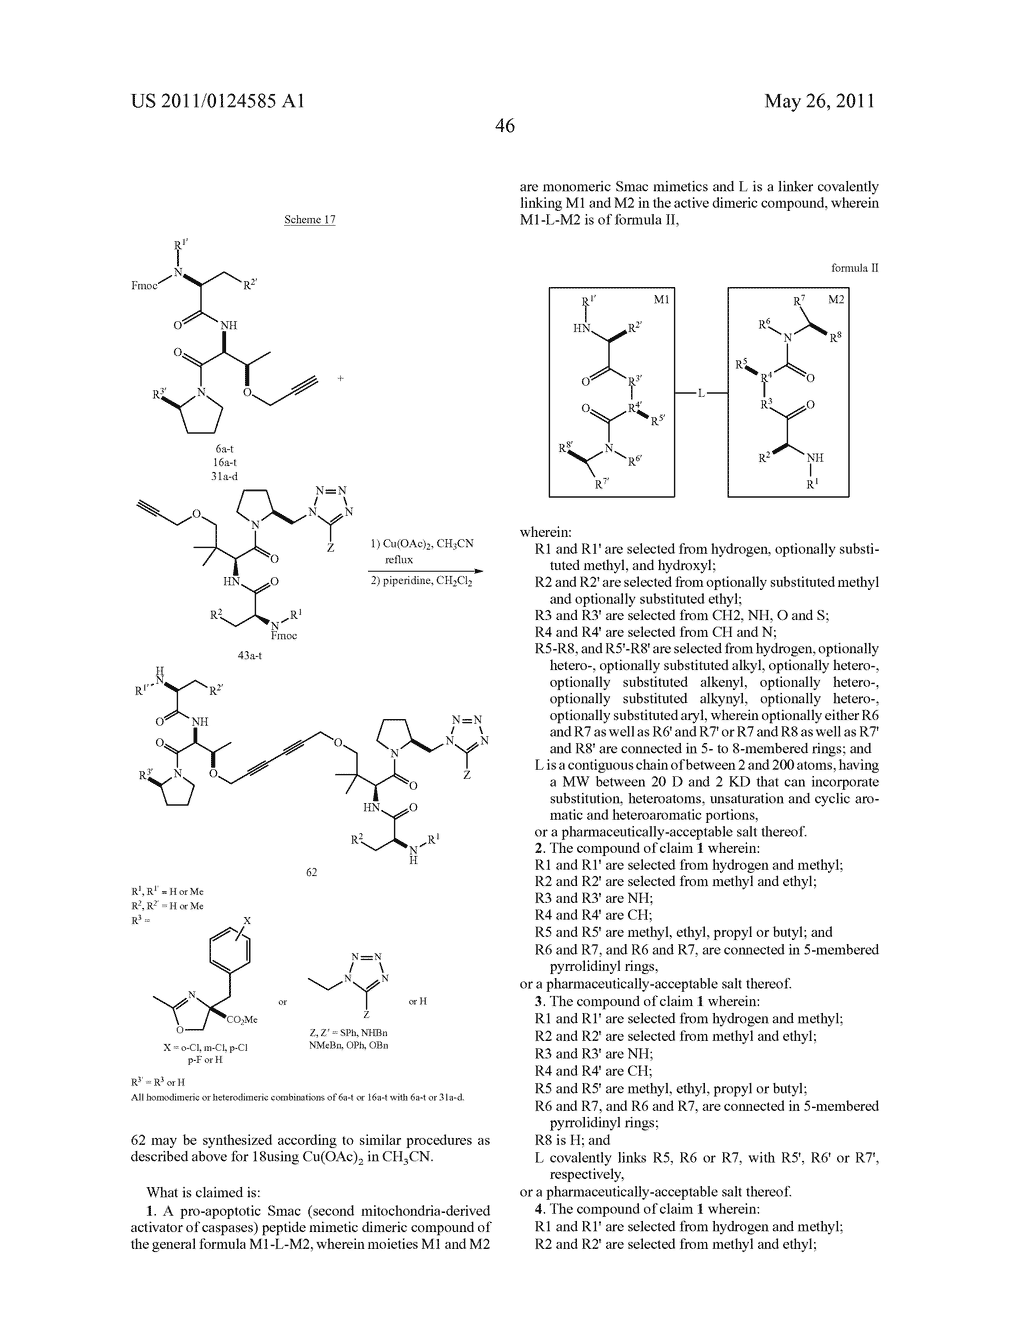 Dimeric Small Molecule Potentiators of Apoptosis - diagram, schematic, and image 47